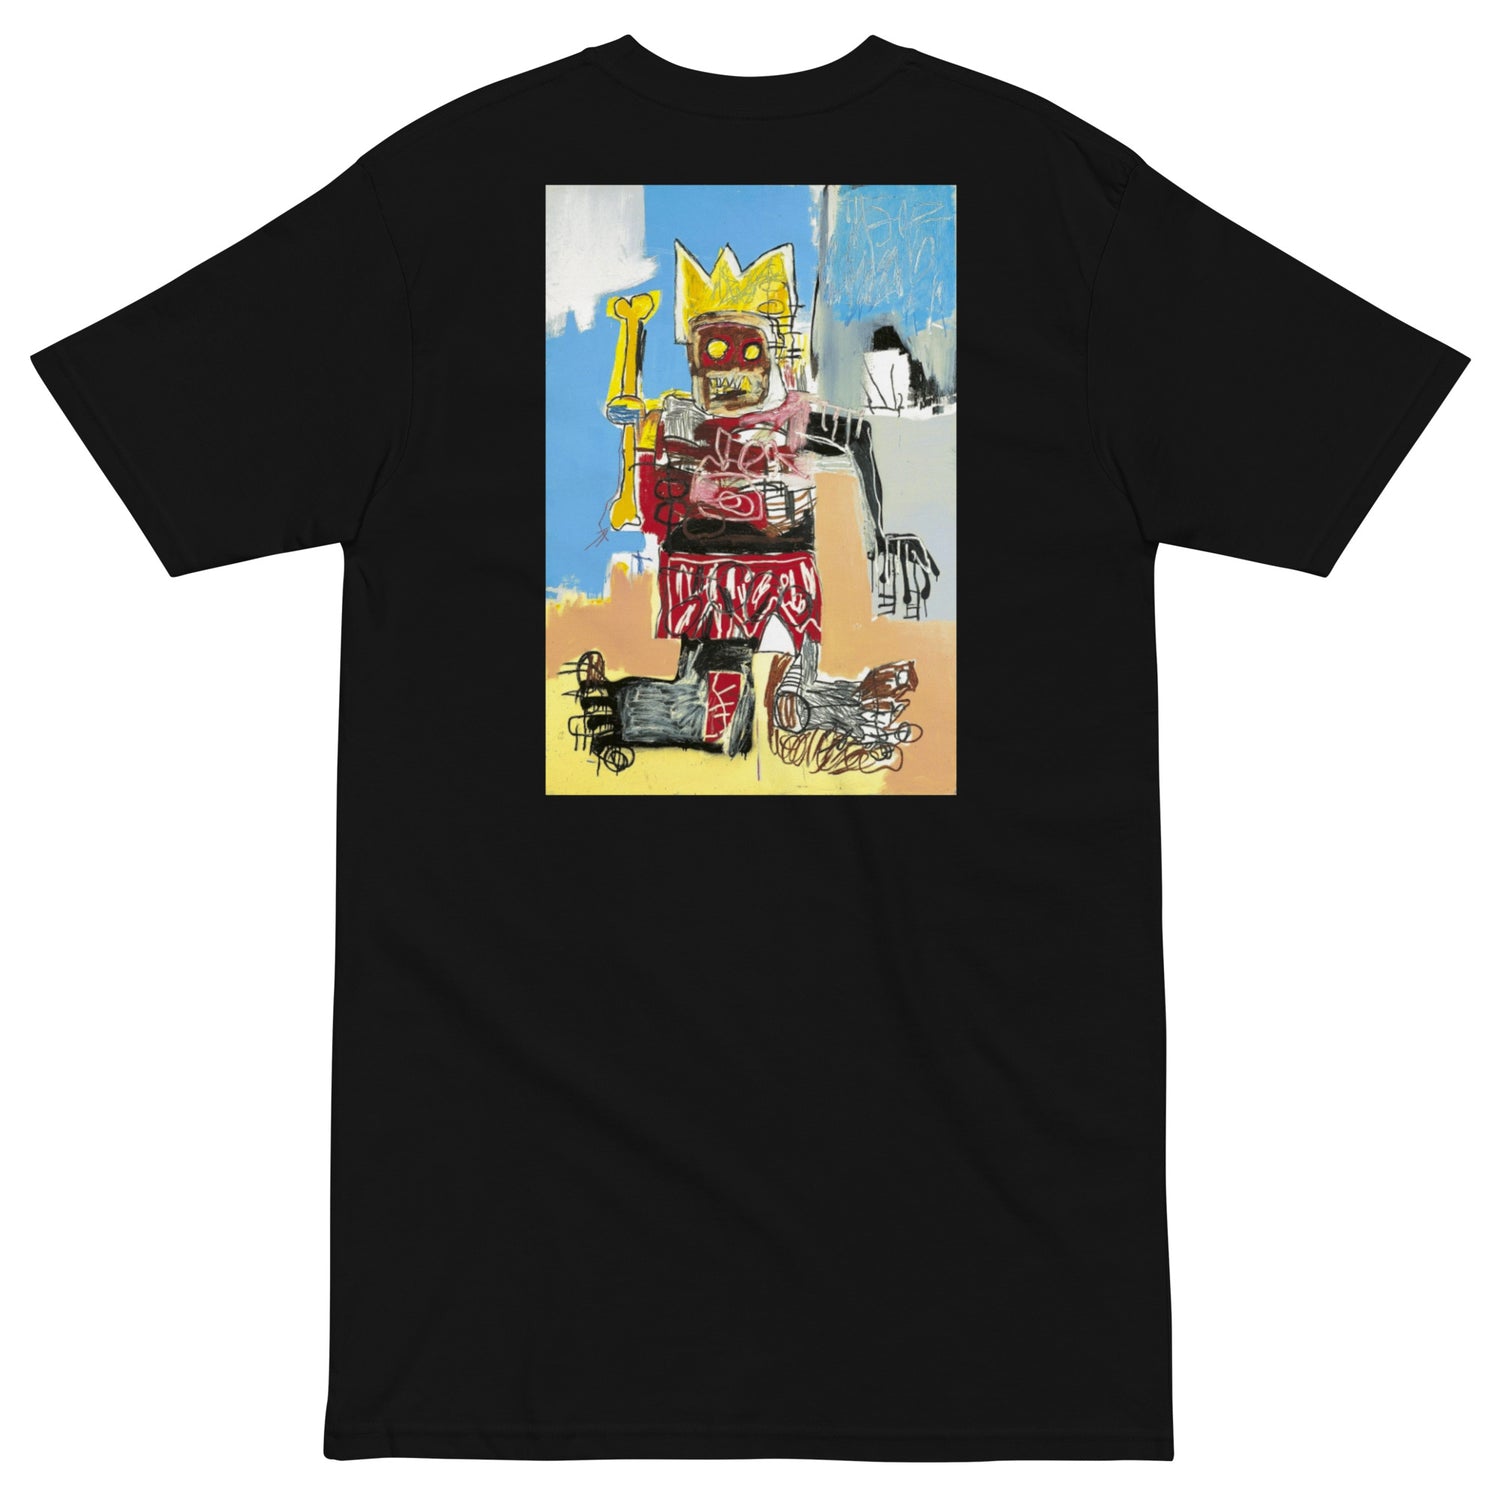 Jean-Michel Basquiat "Untitled" 1982 Artwork Embroidered + Printed Premium Streetwear T-shirt Black